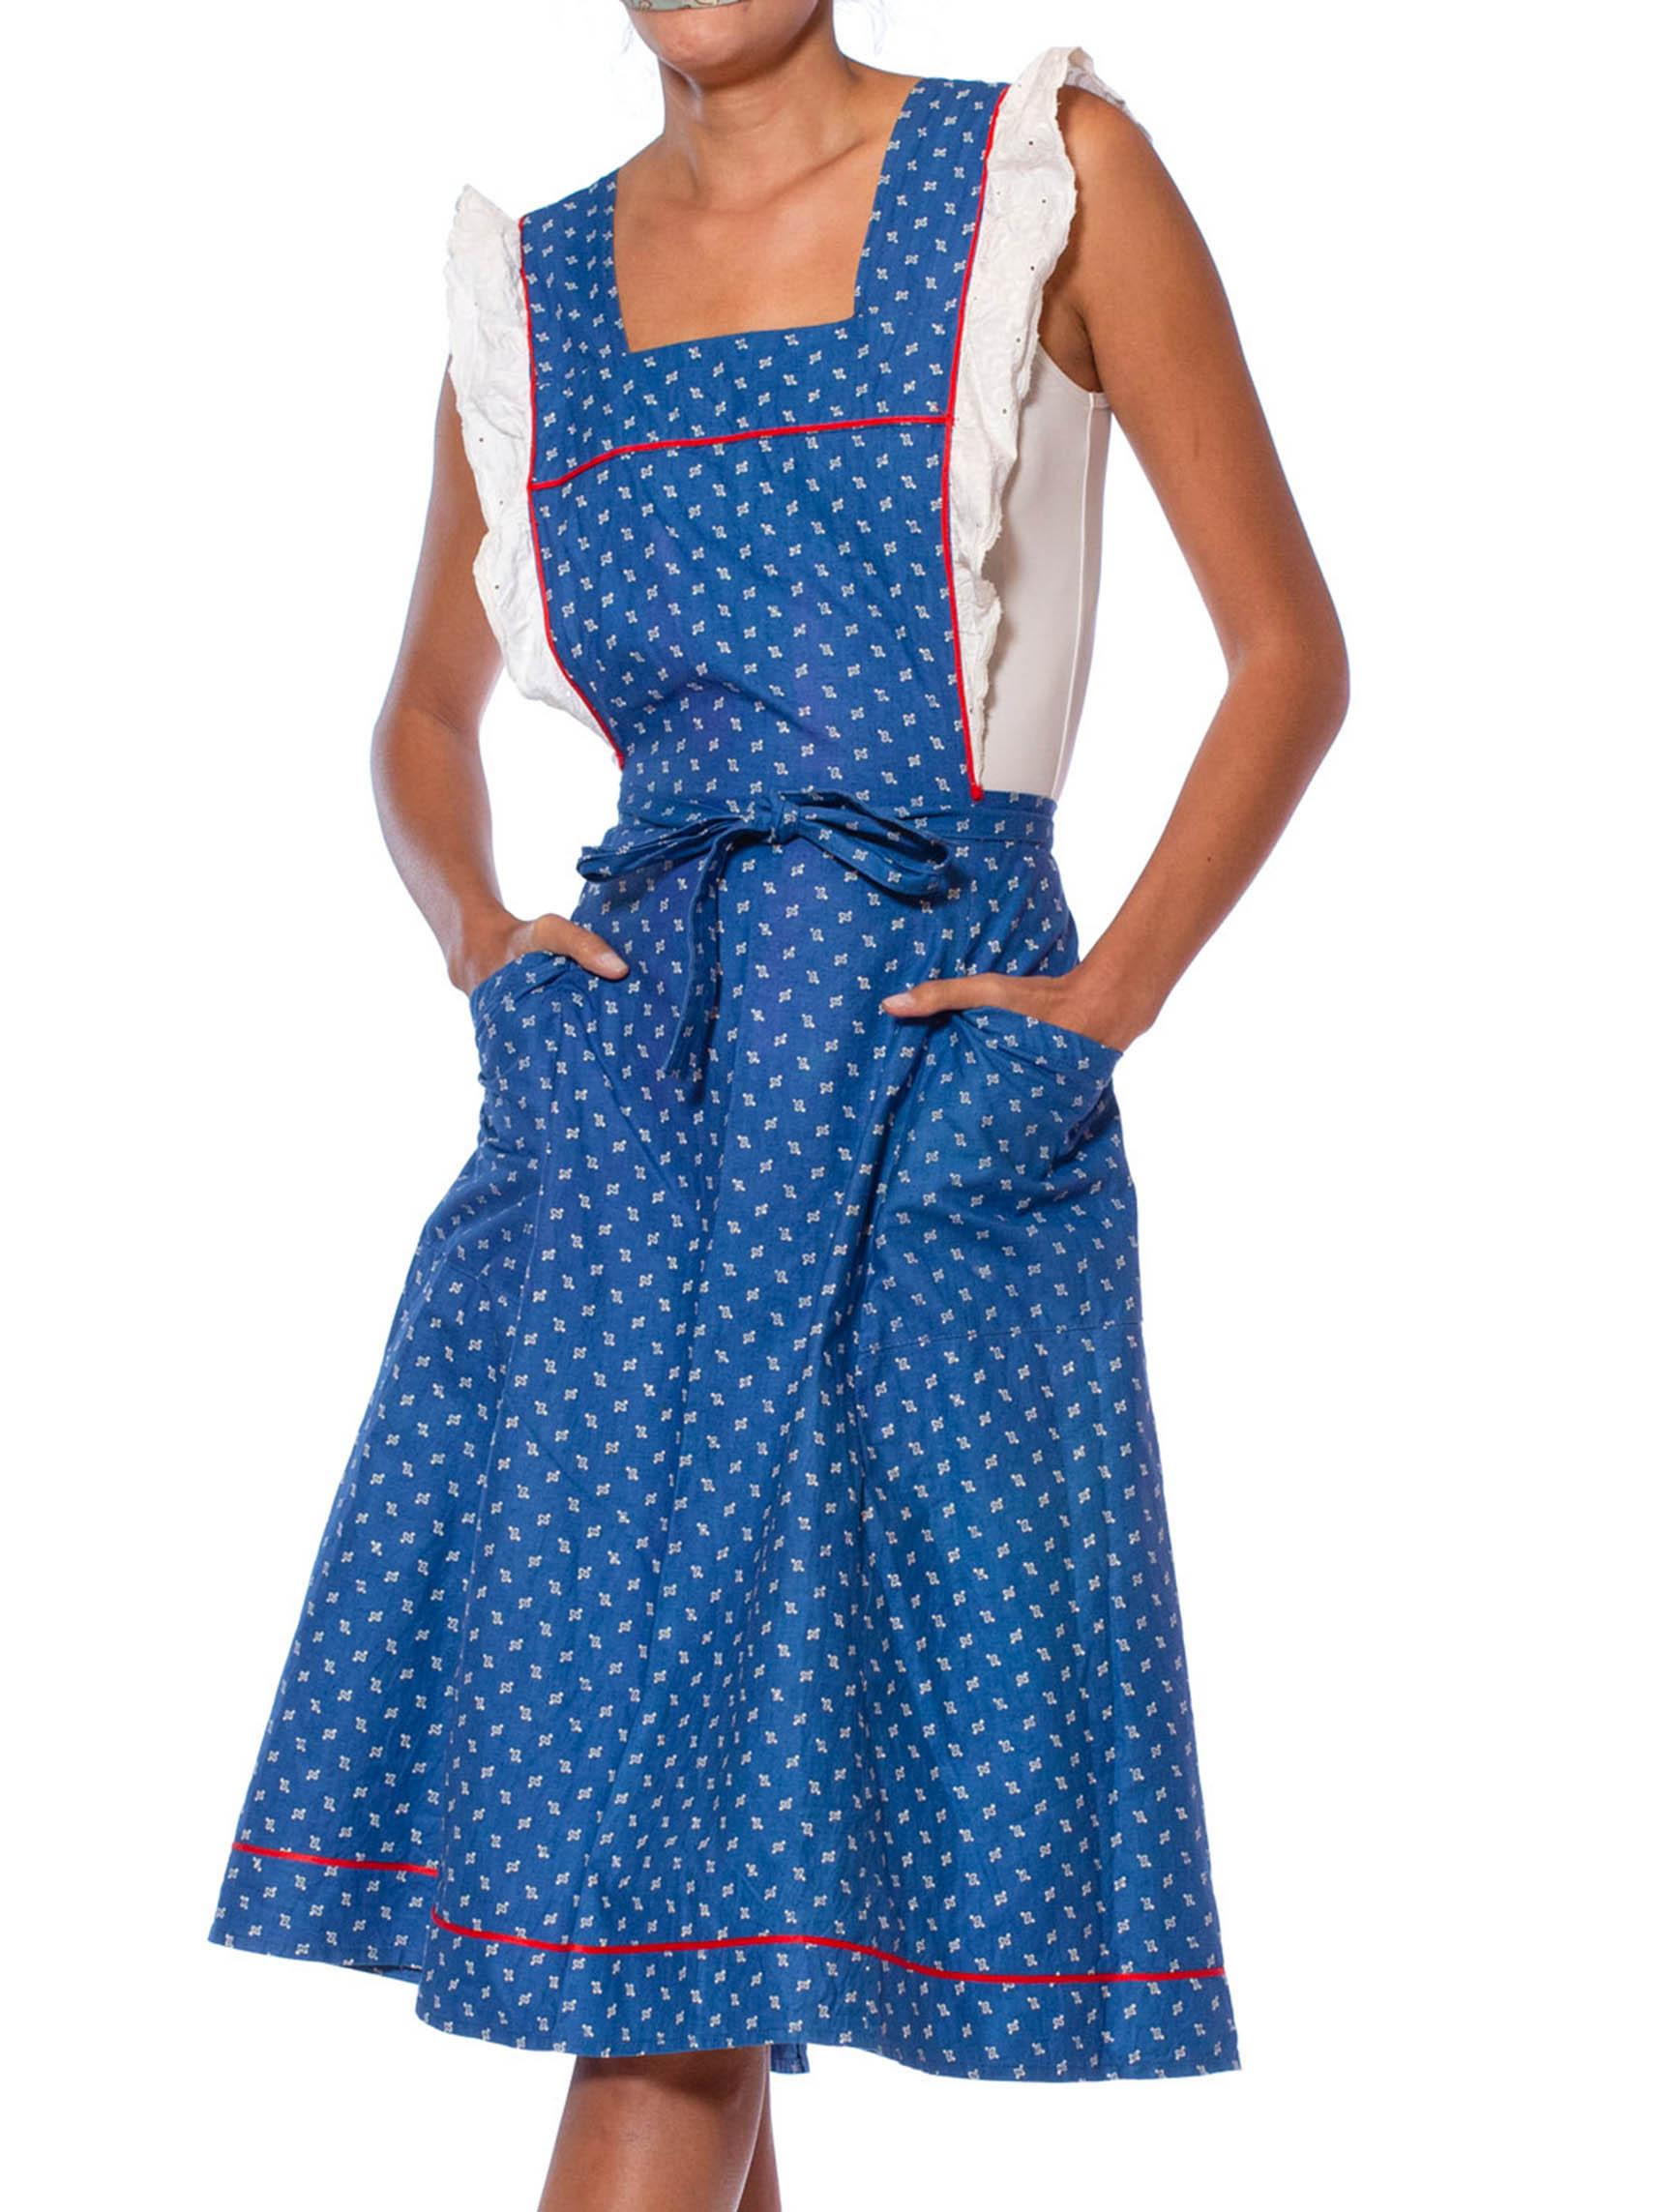 blue apron dress